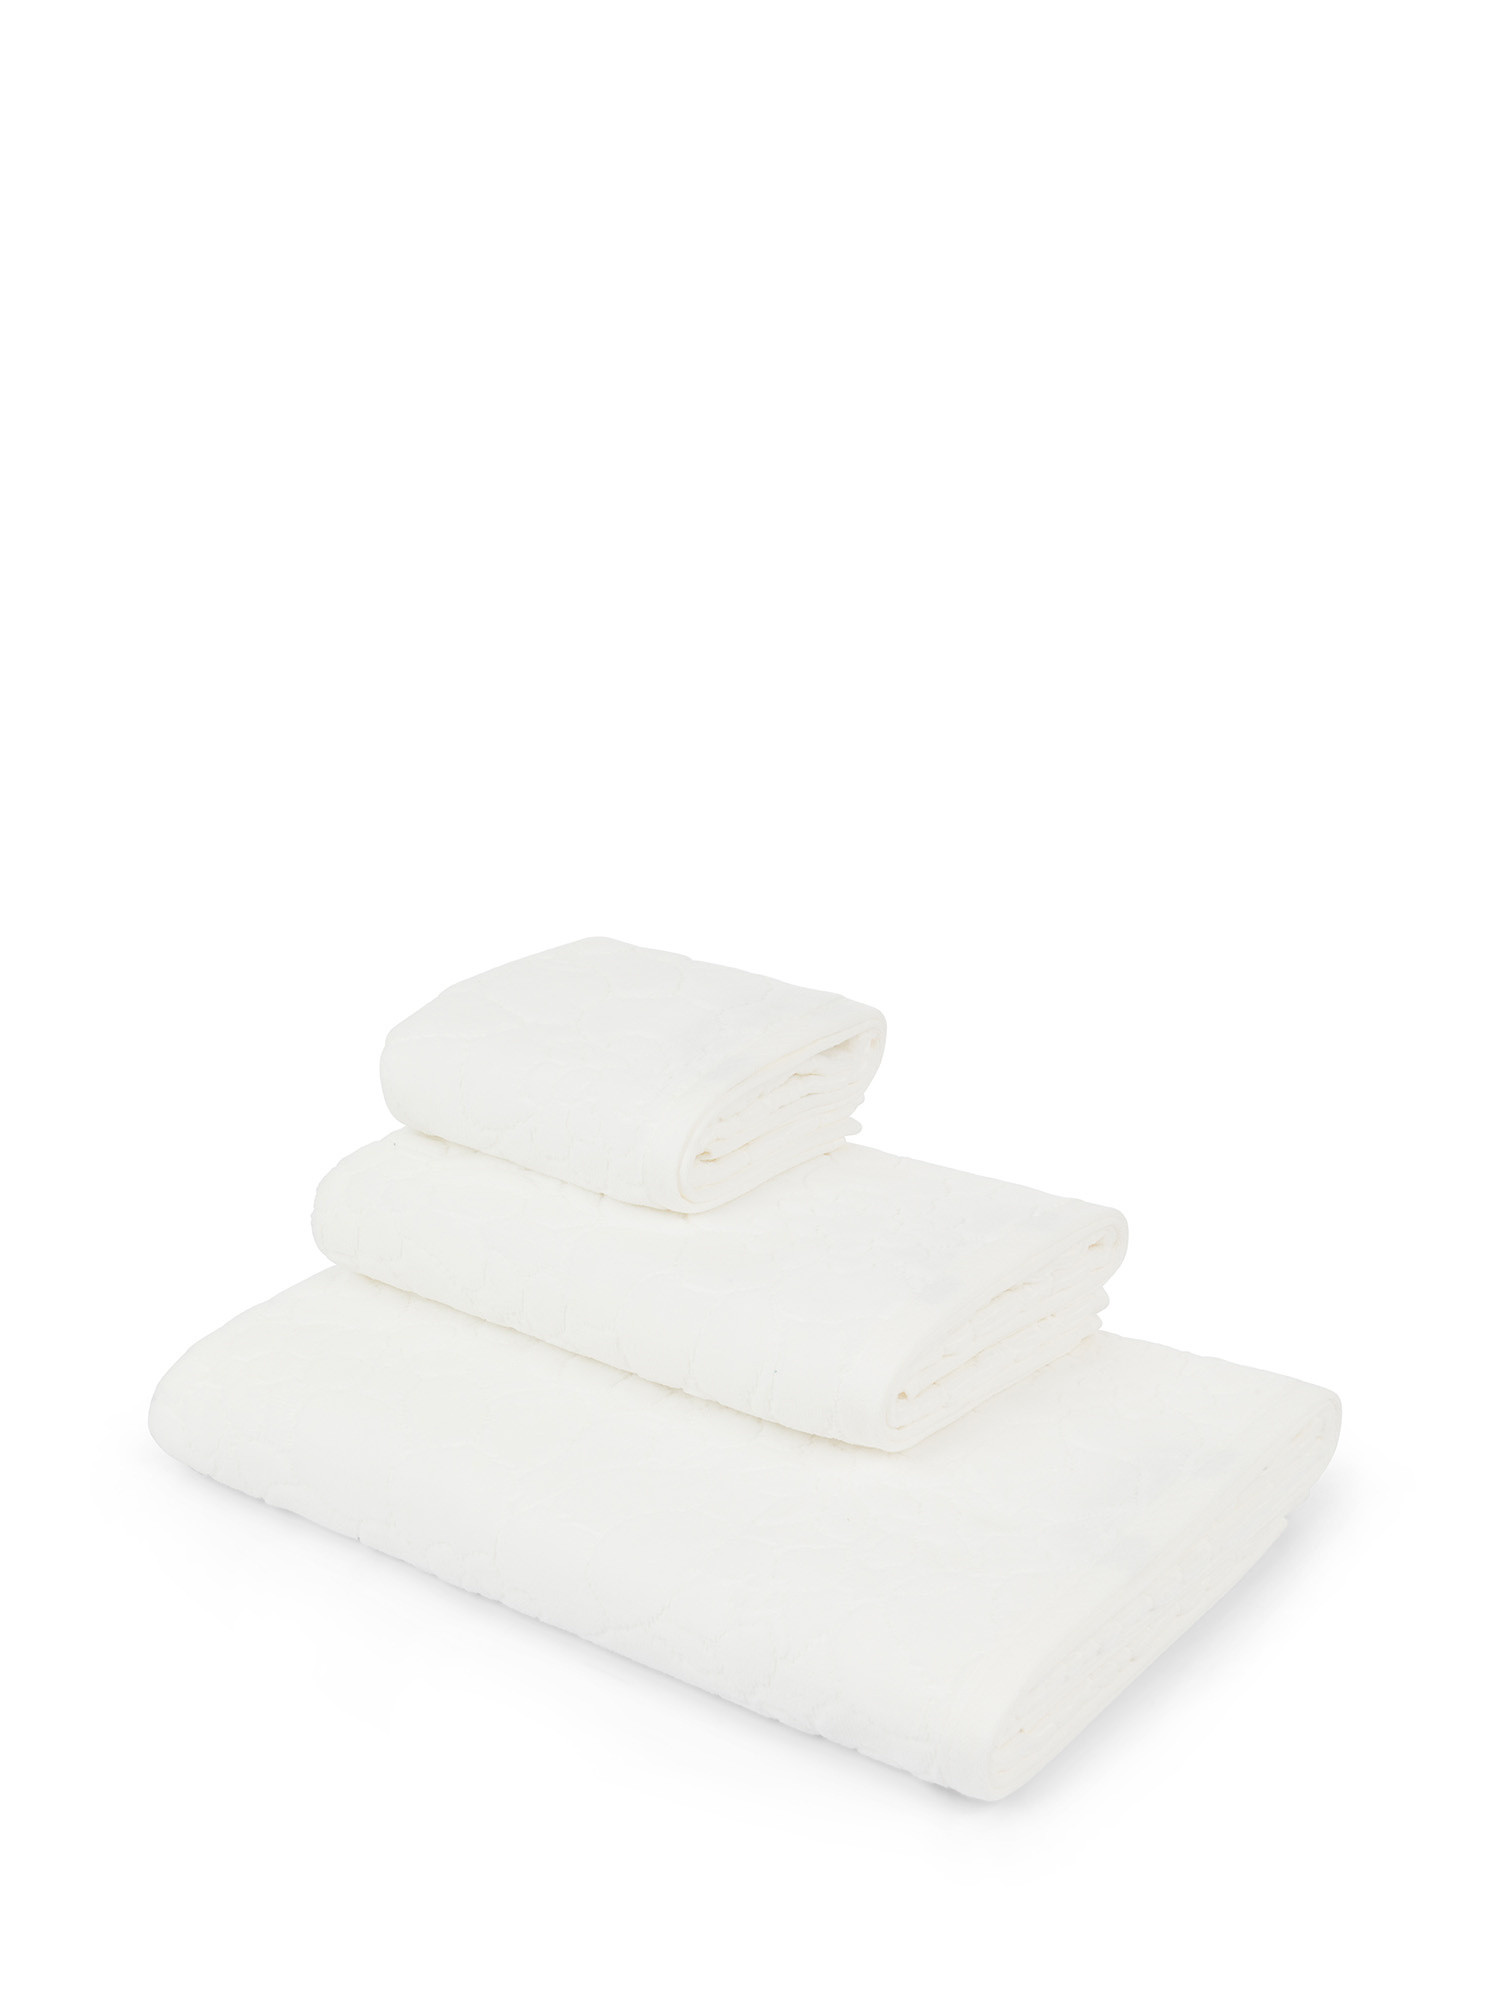 Asciugamano cotone velour motivo floreale a rilievo, Bianco, large image number 0